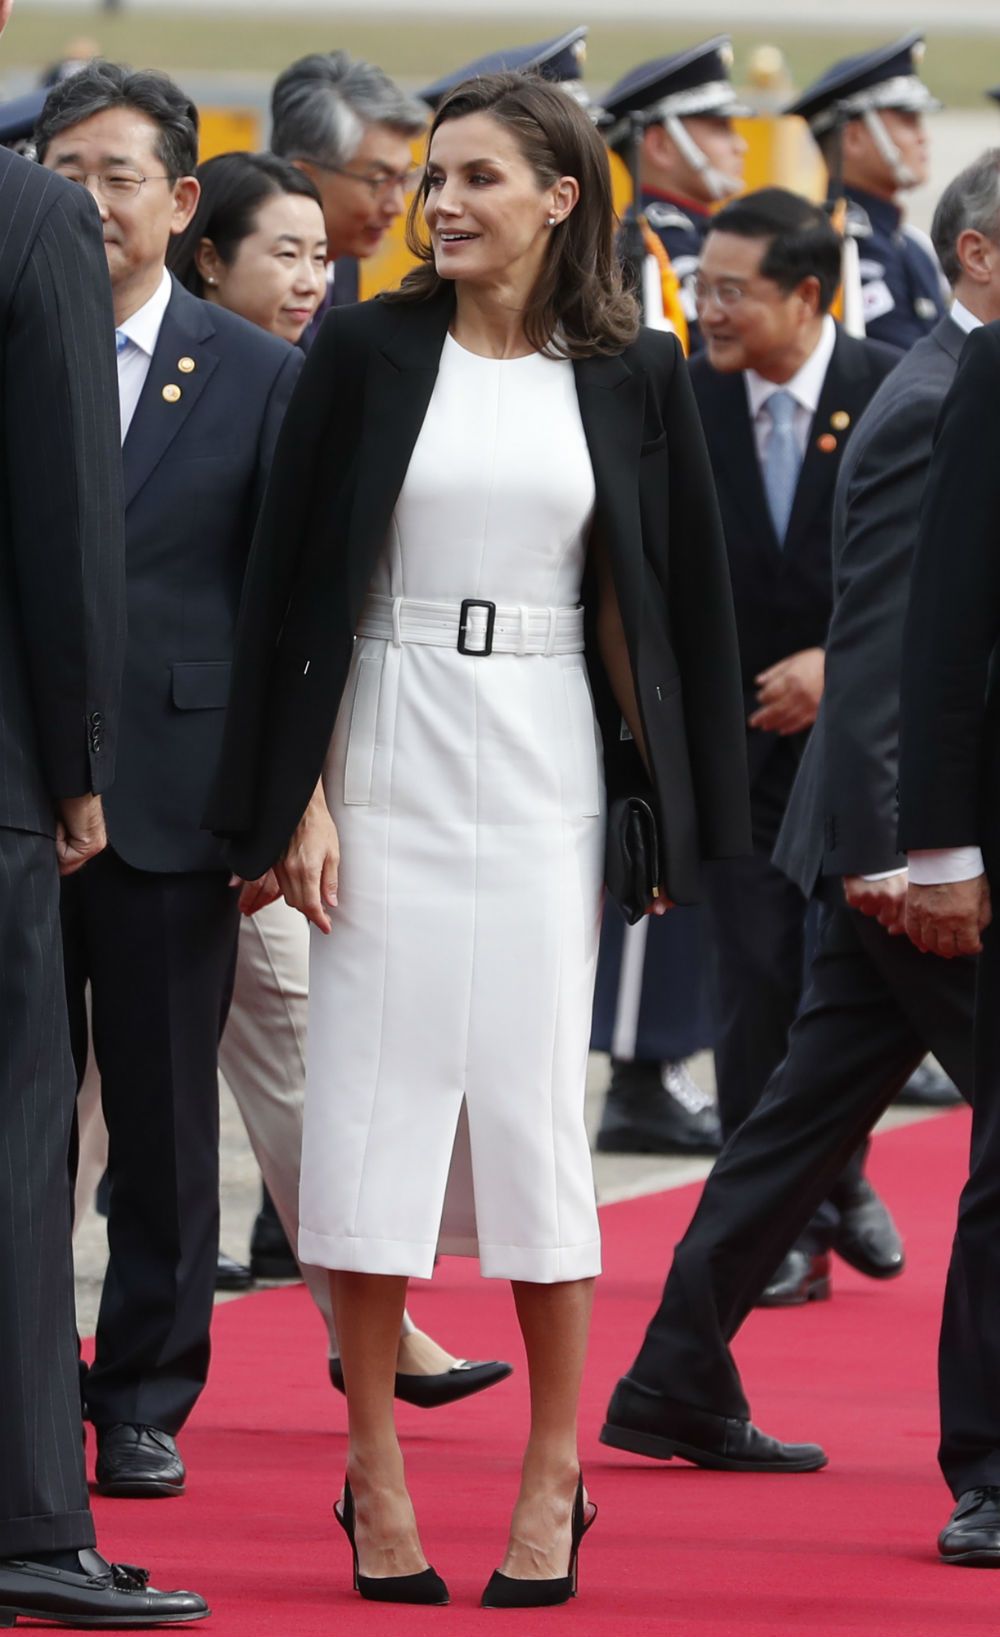 La Reina Letizia con vestido blanco y blazer negra